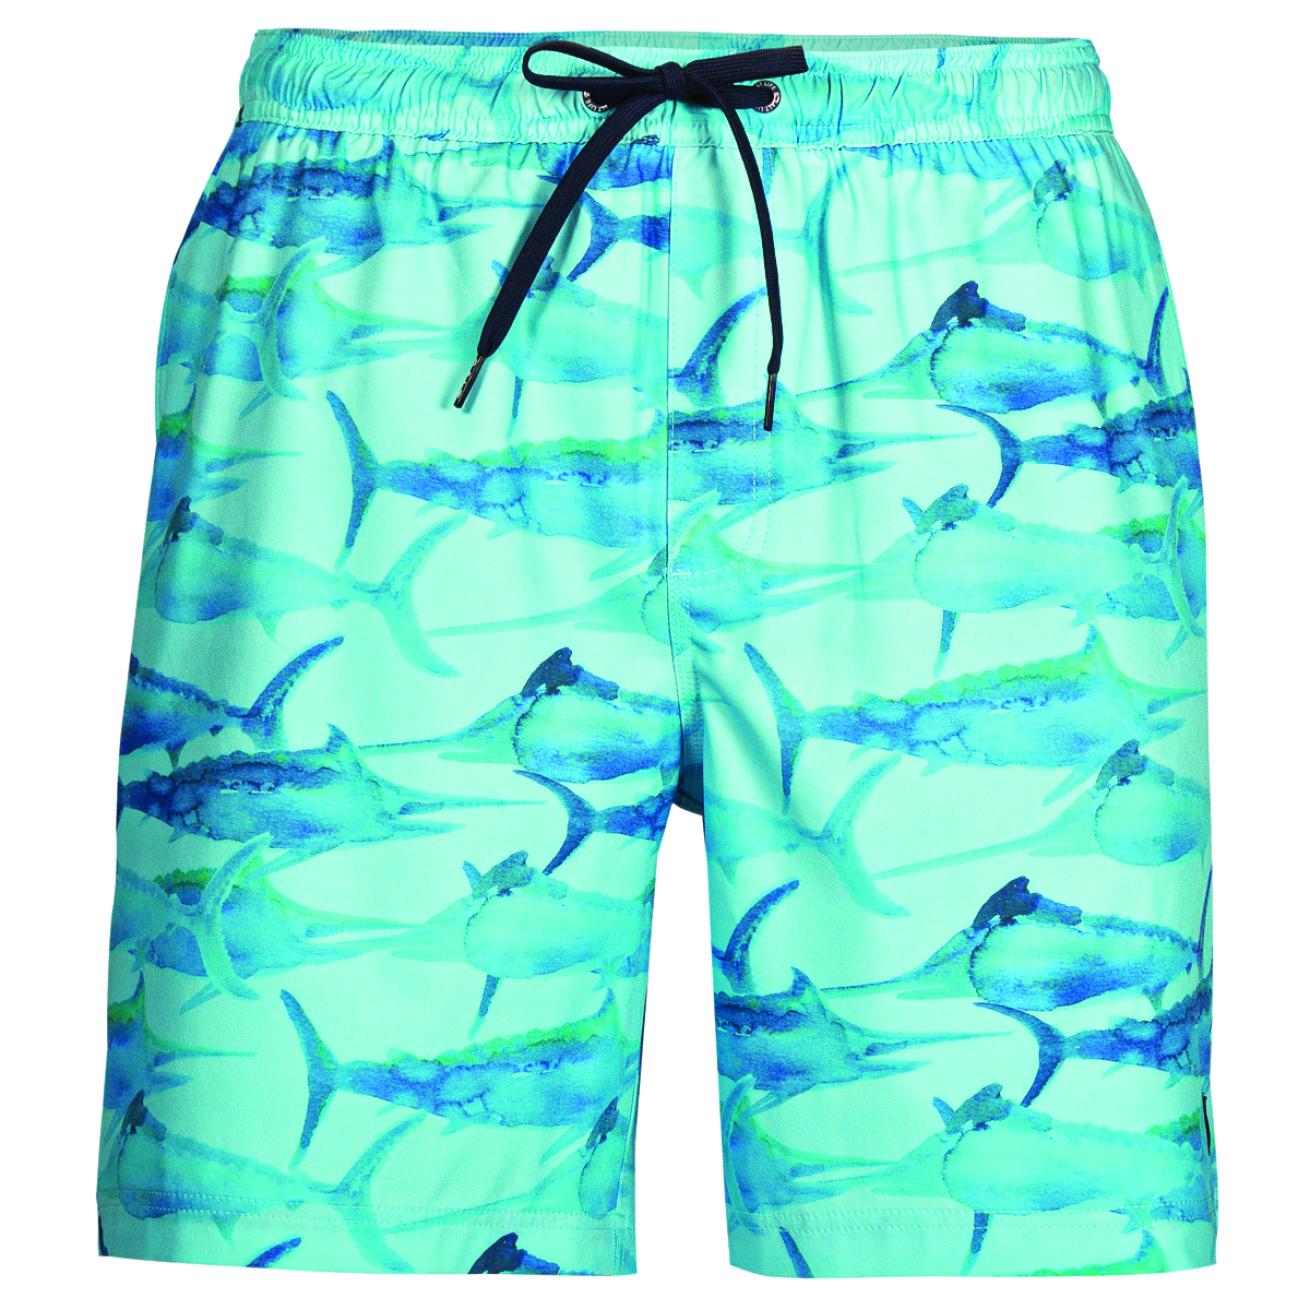 Valtameri - Set: Short-Sleeve Swim Top + Swim Shorts